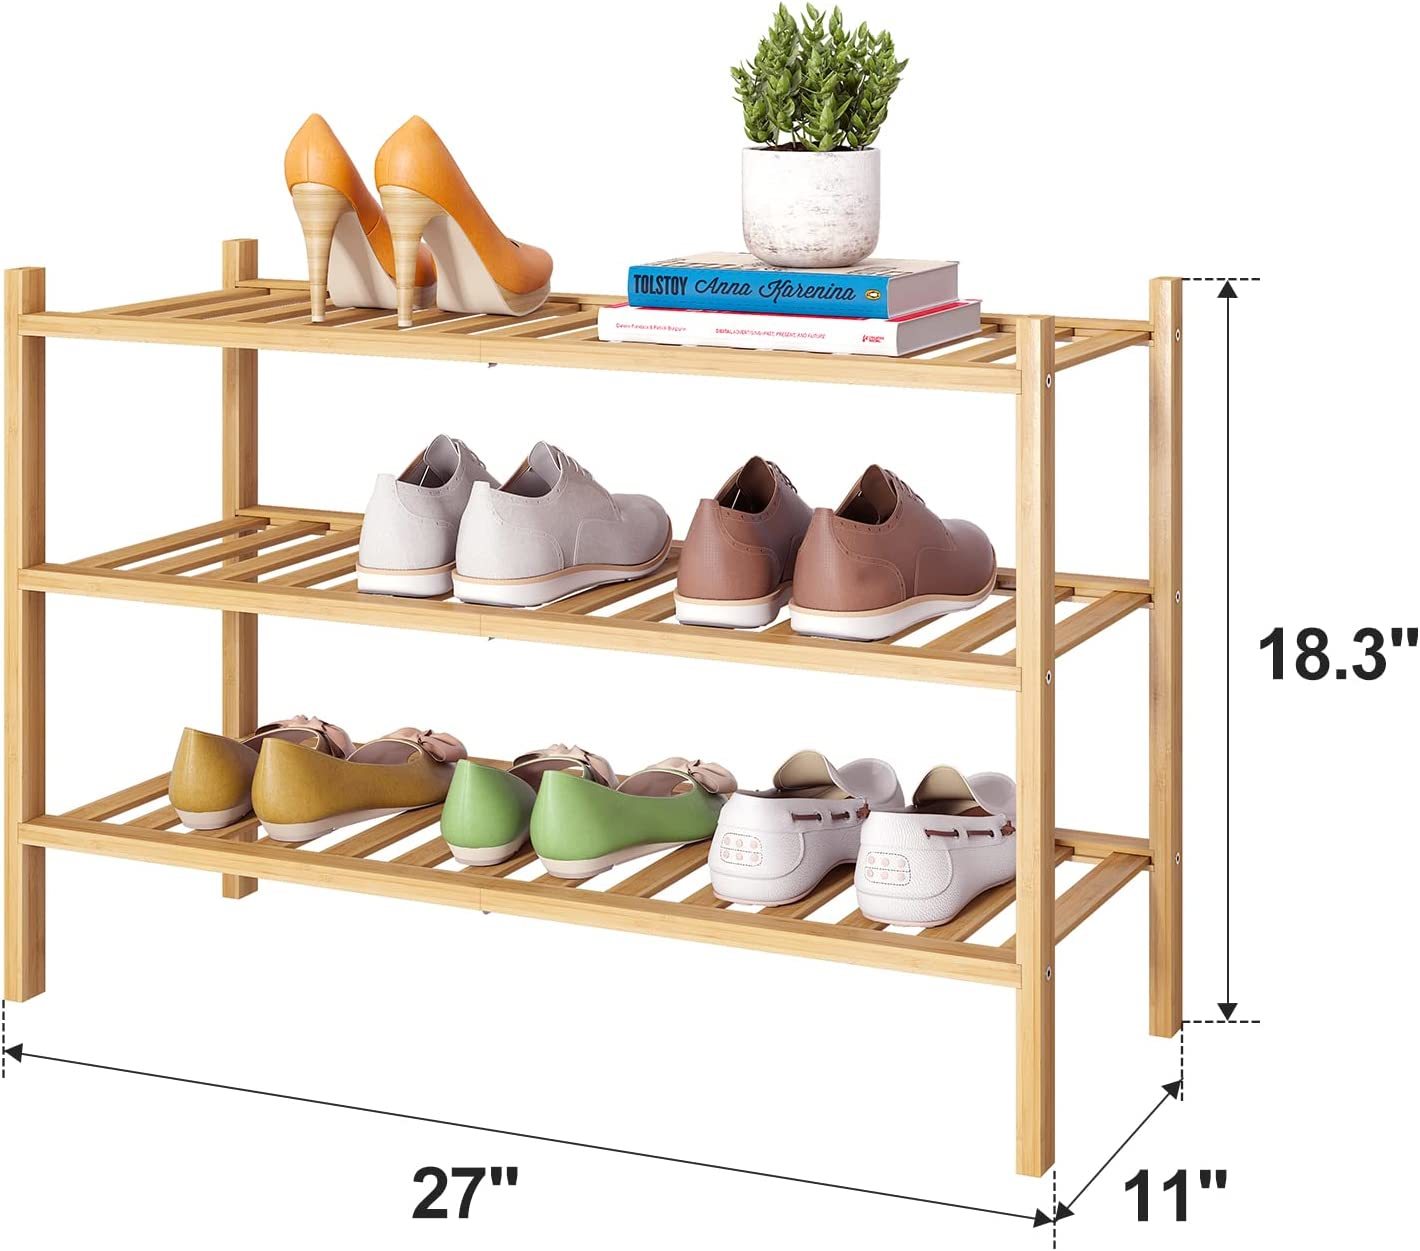 IOTXY Shoe Rack Storage Bench - Bamboo Shoe Shelf with Cushioned